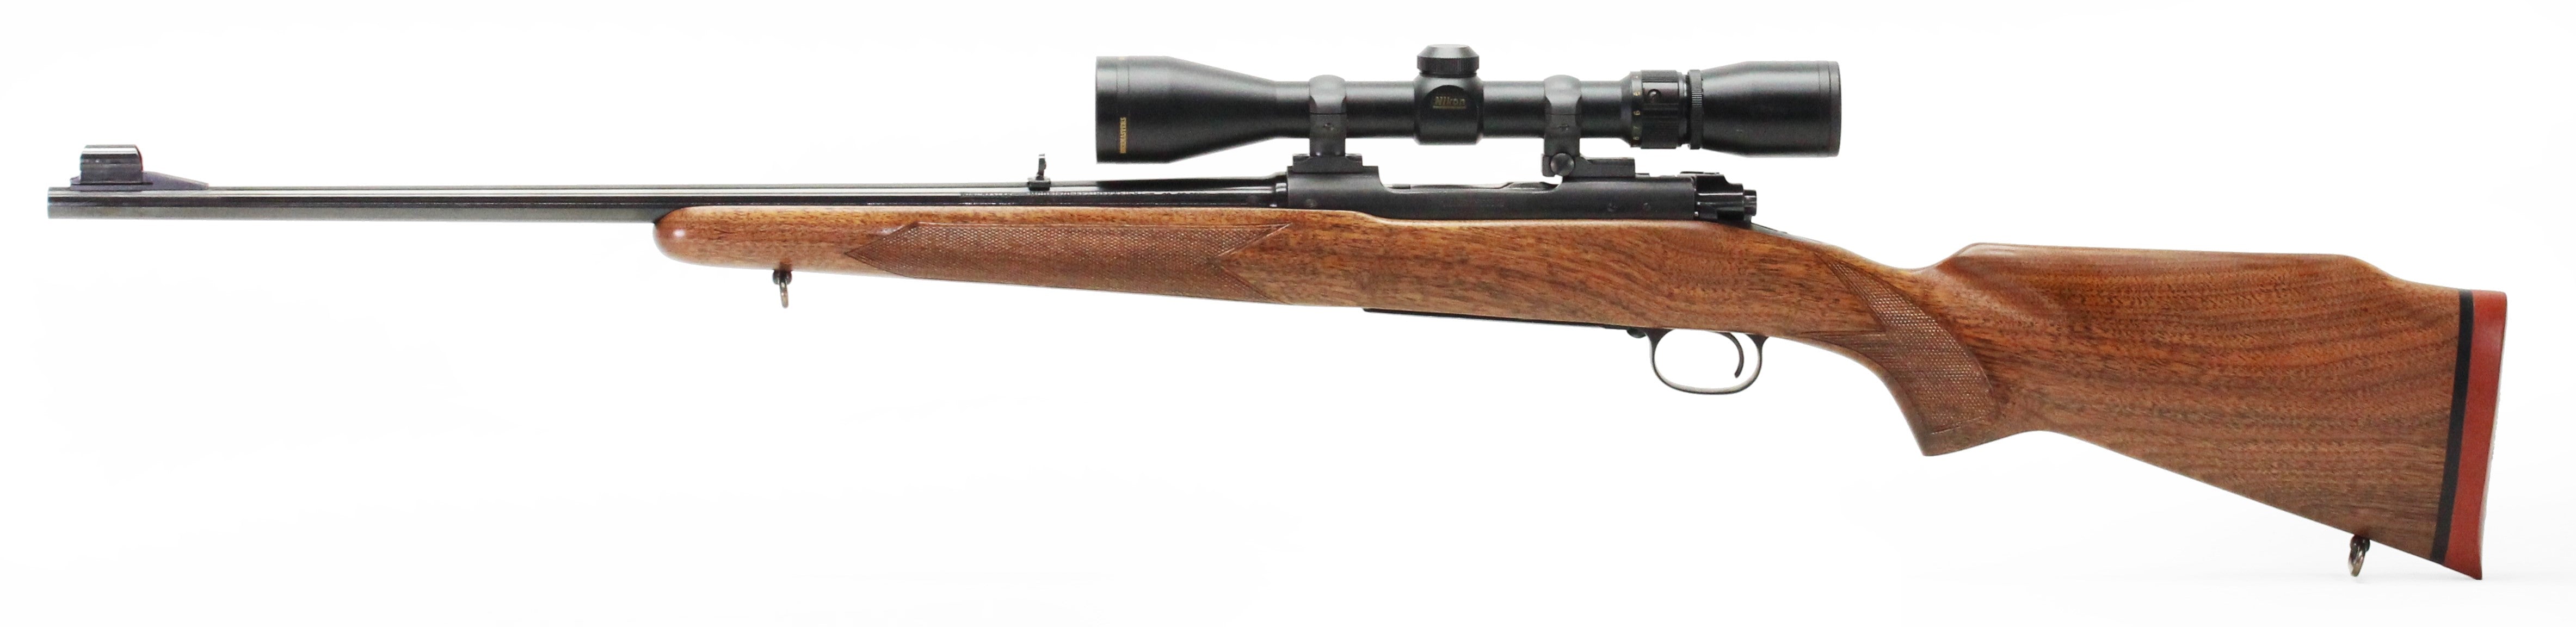 .30-06 Springfield Featherweight Rifle - 1962